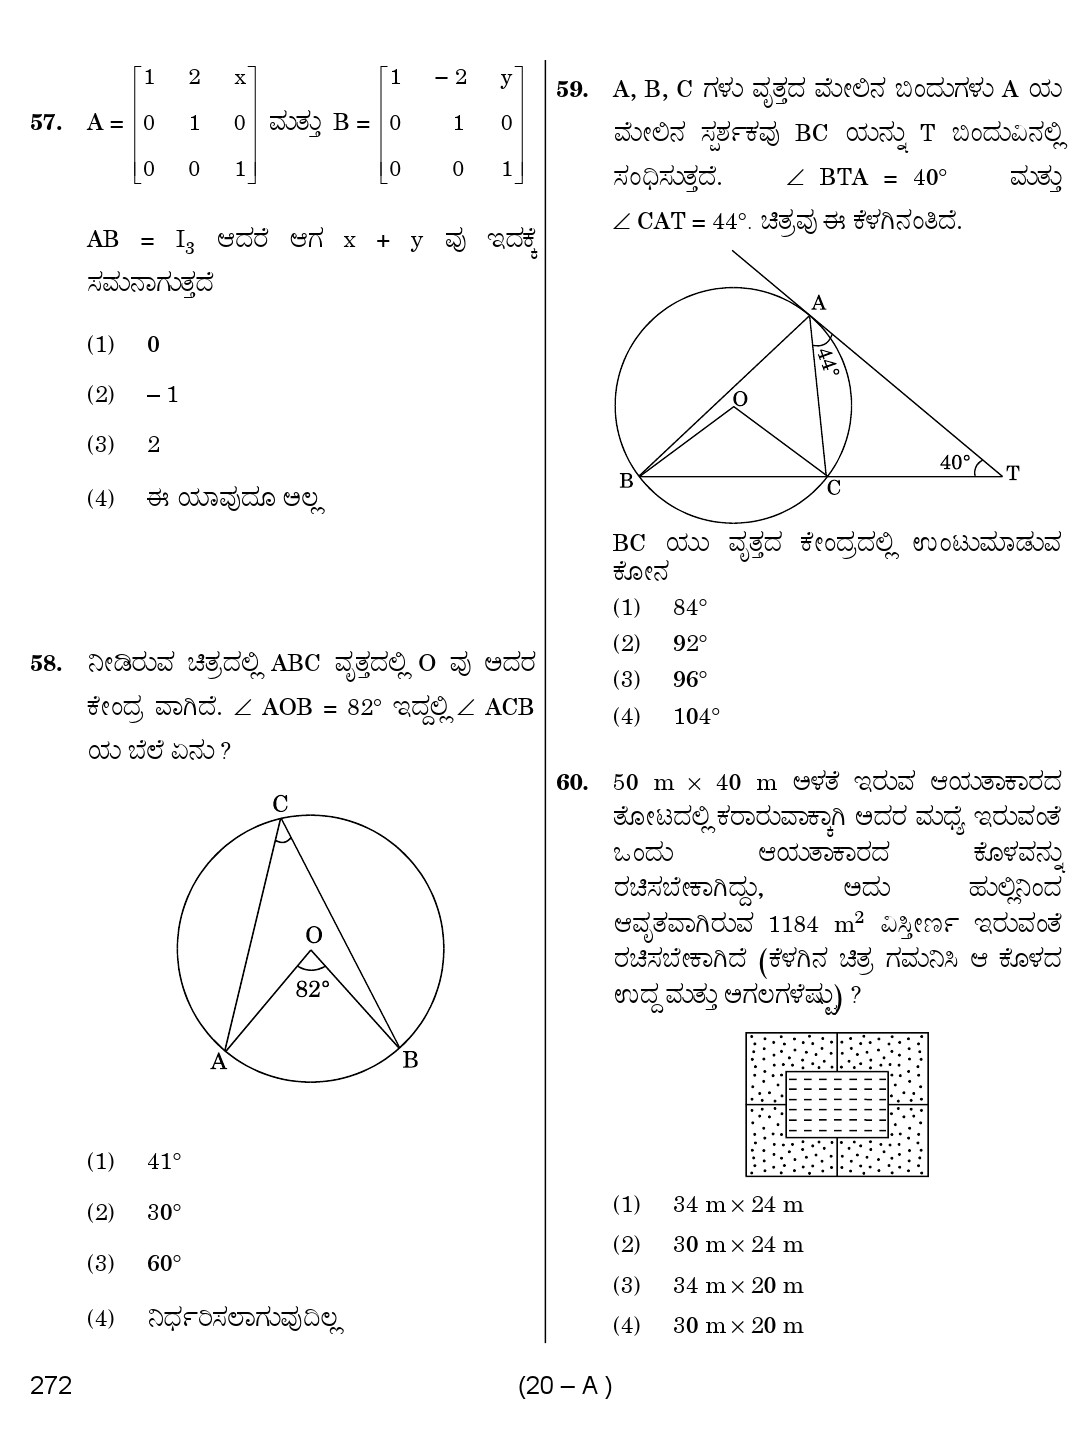 Karnataka PSC Mathematics Teacher Exam Sample Question Paper Subject code 272 20